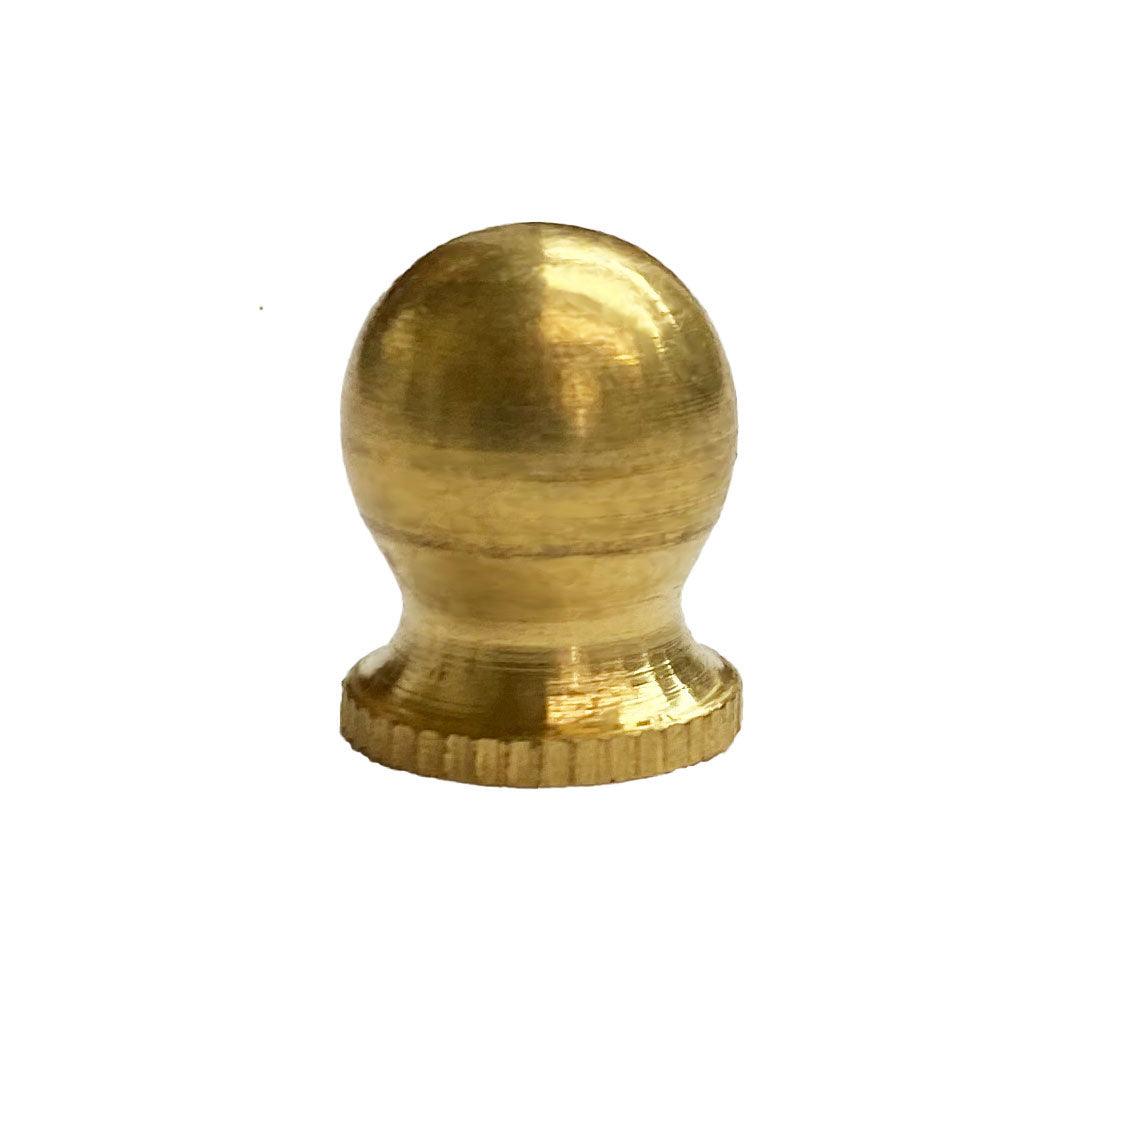 Small Brass Balls, 1 inch diameter - Paxton Hardware